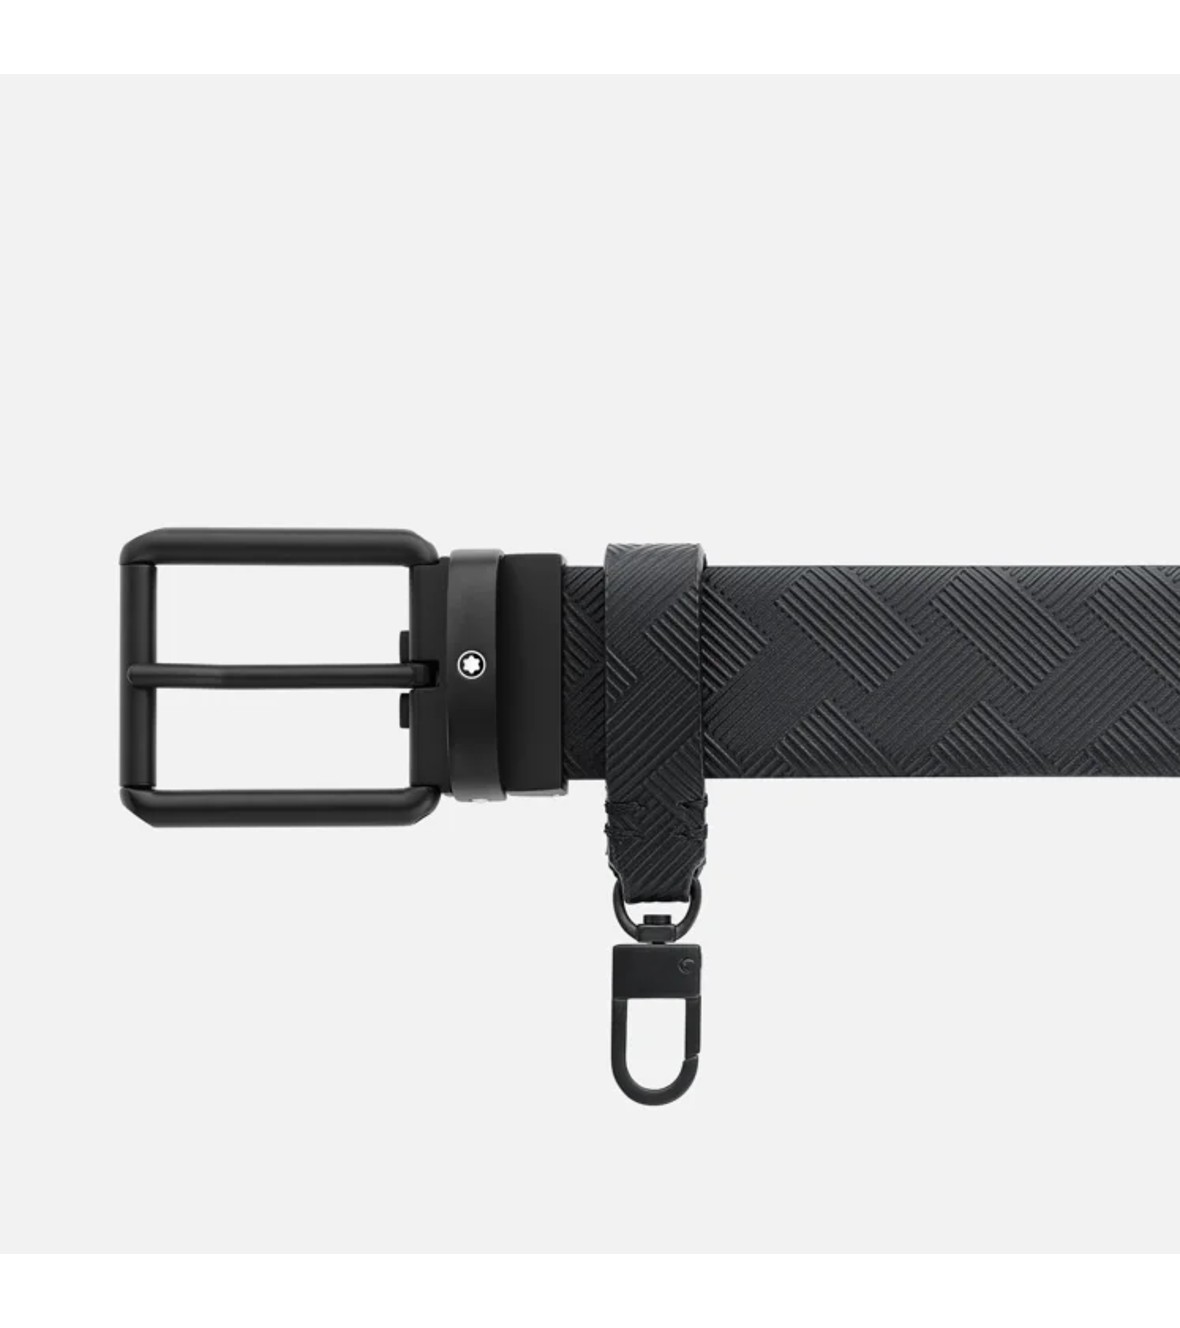 Printed black/plain black 35 mm reversible leather belt